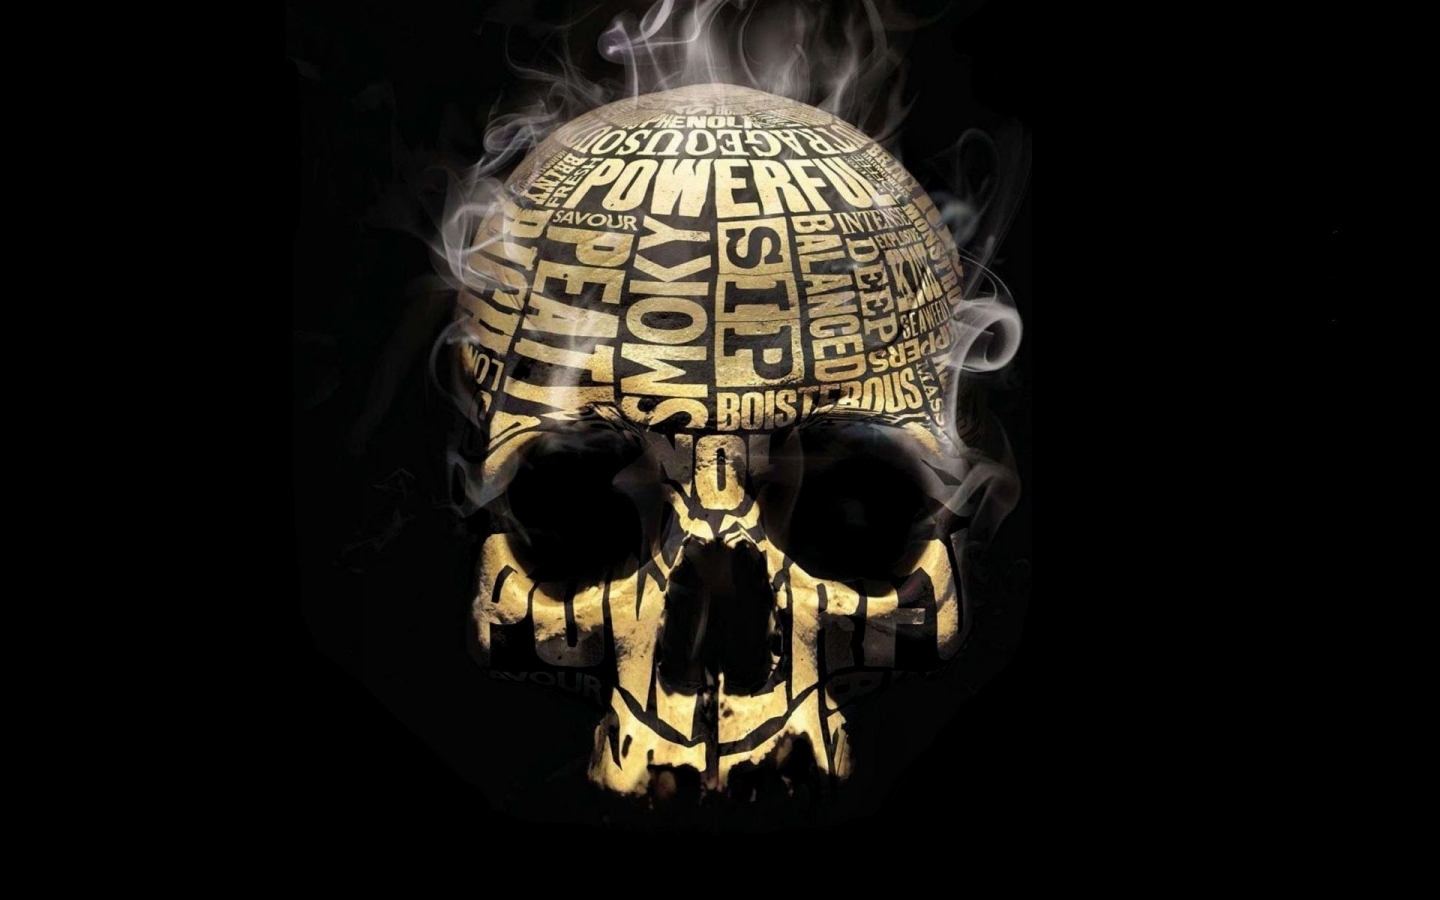 Skull Smoker for 1440 x 900 widescreen resolution